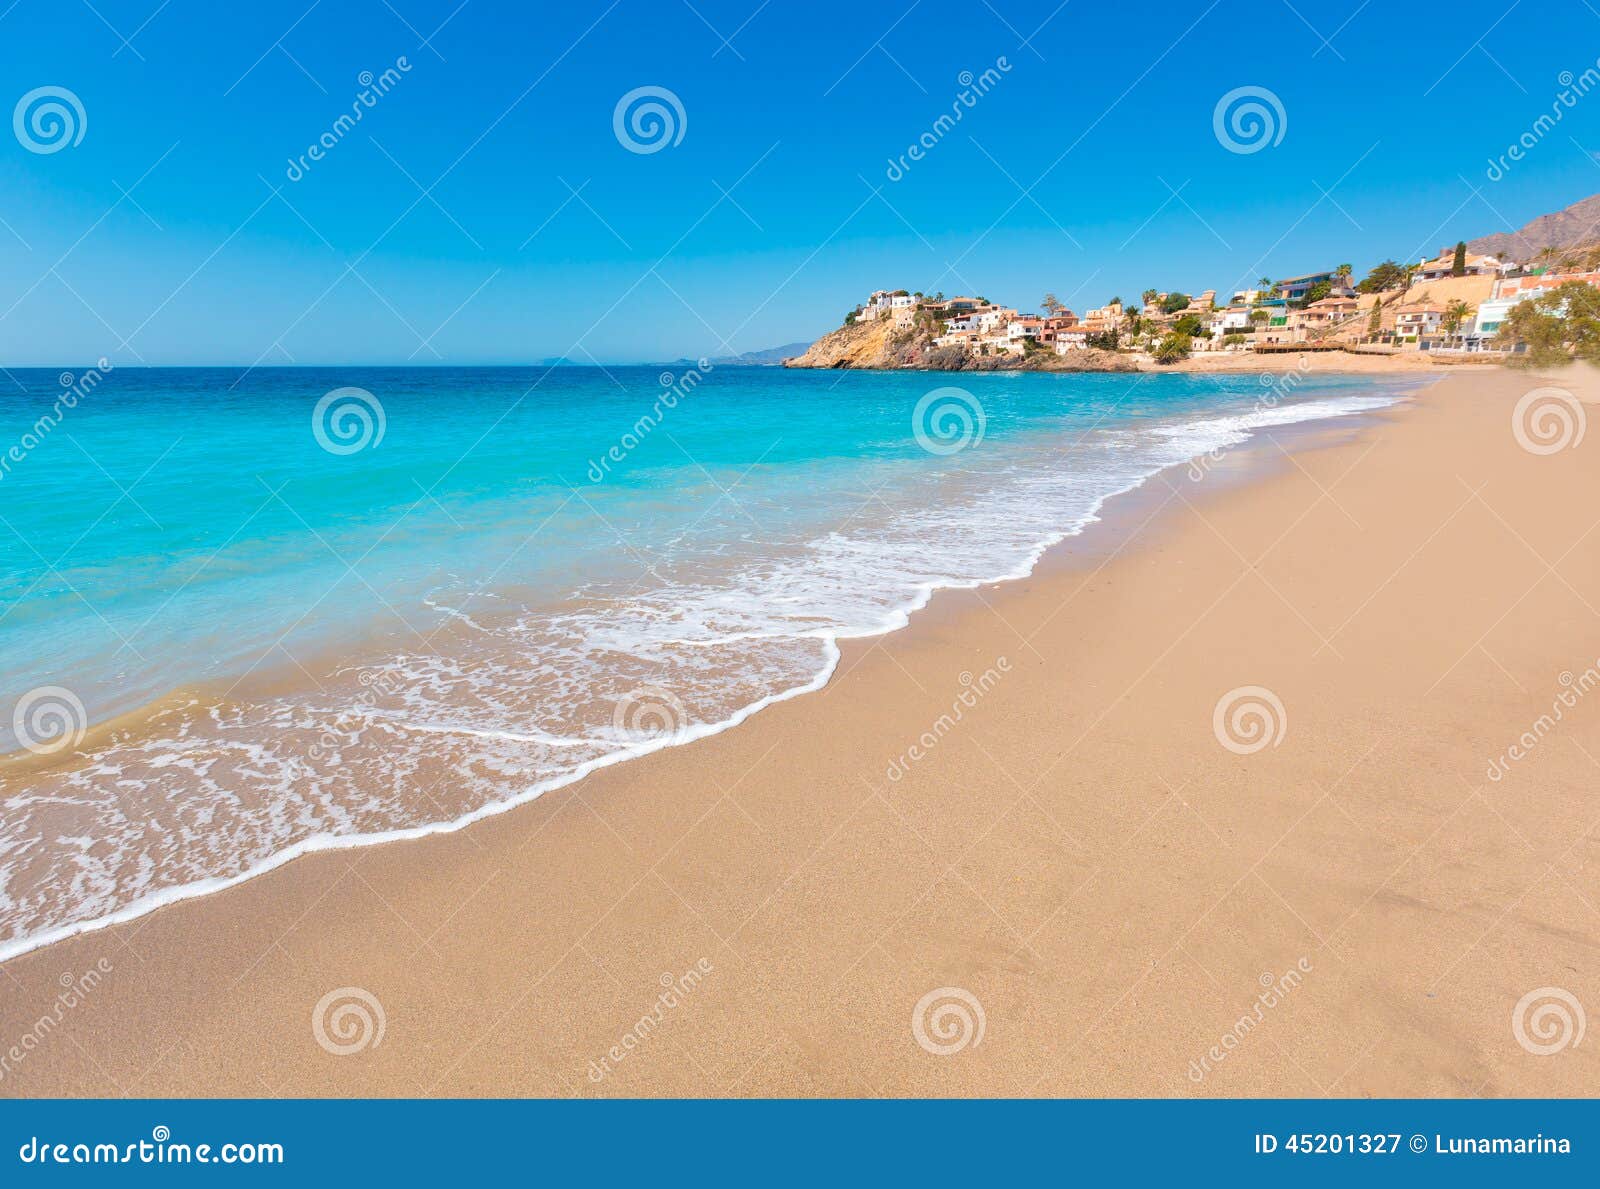 bolnuevo beach in mazarron murcia at spain